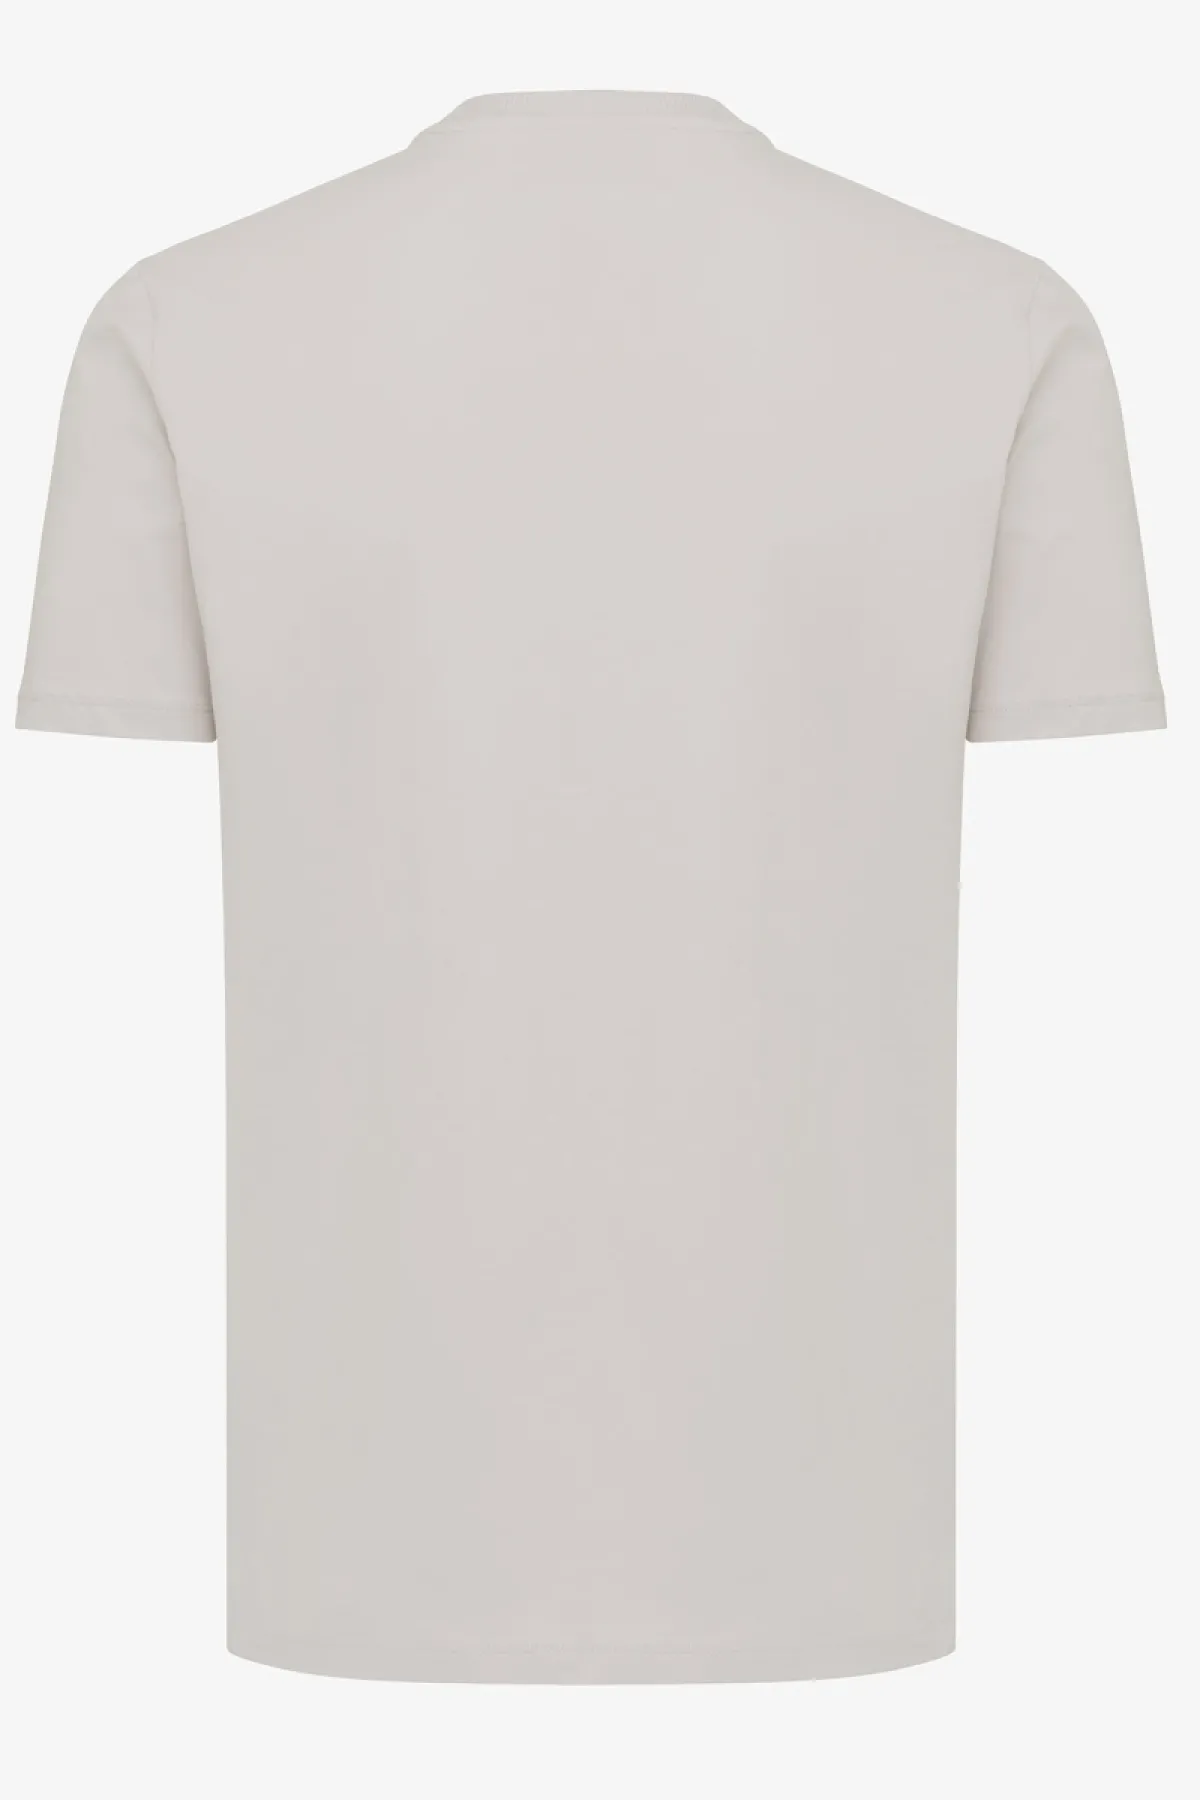 Ice cotton t-shirt print beige